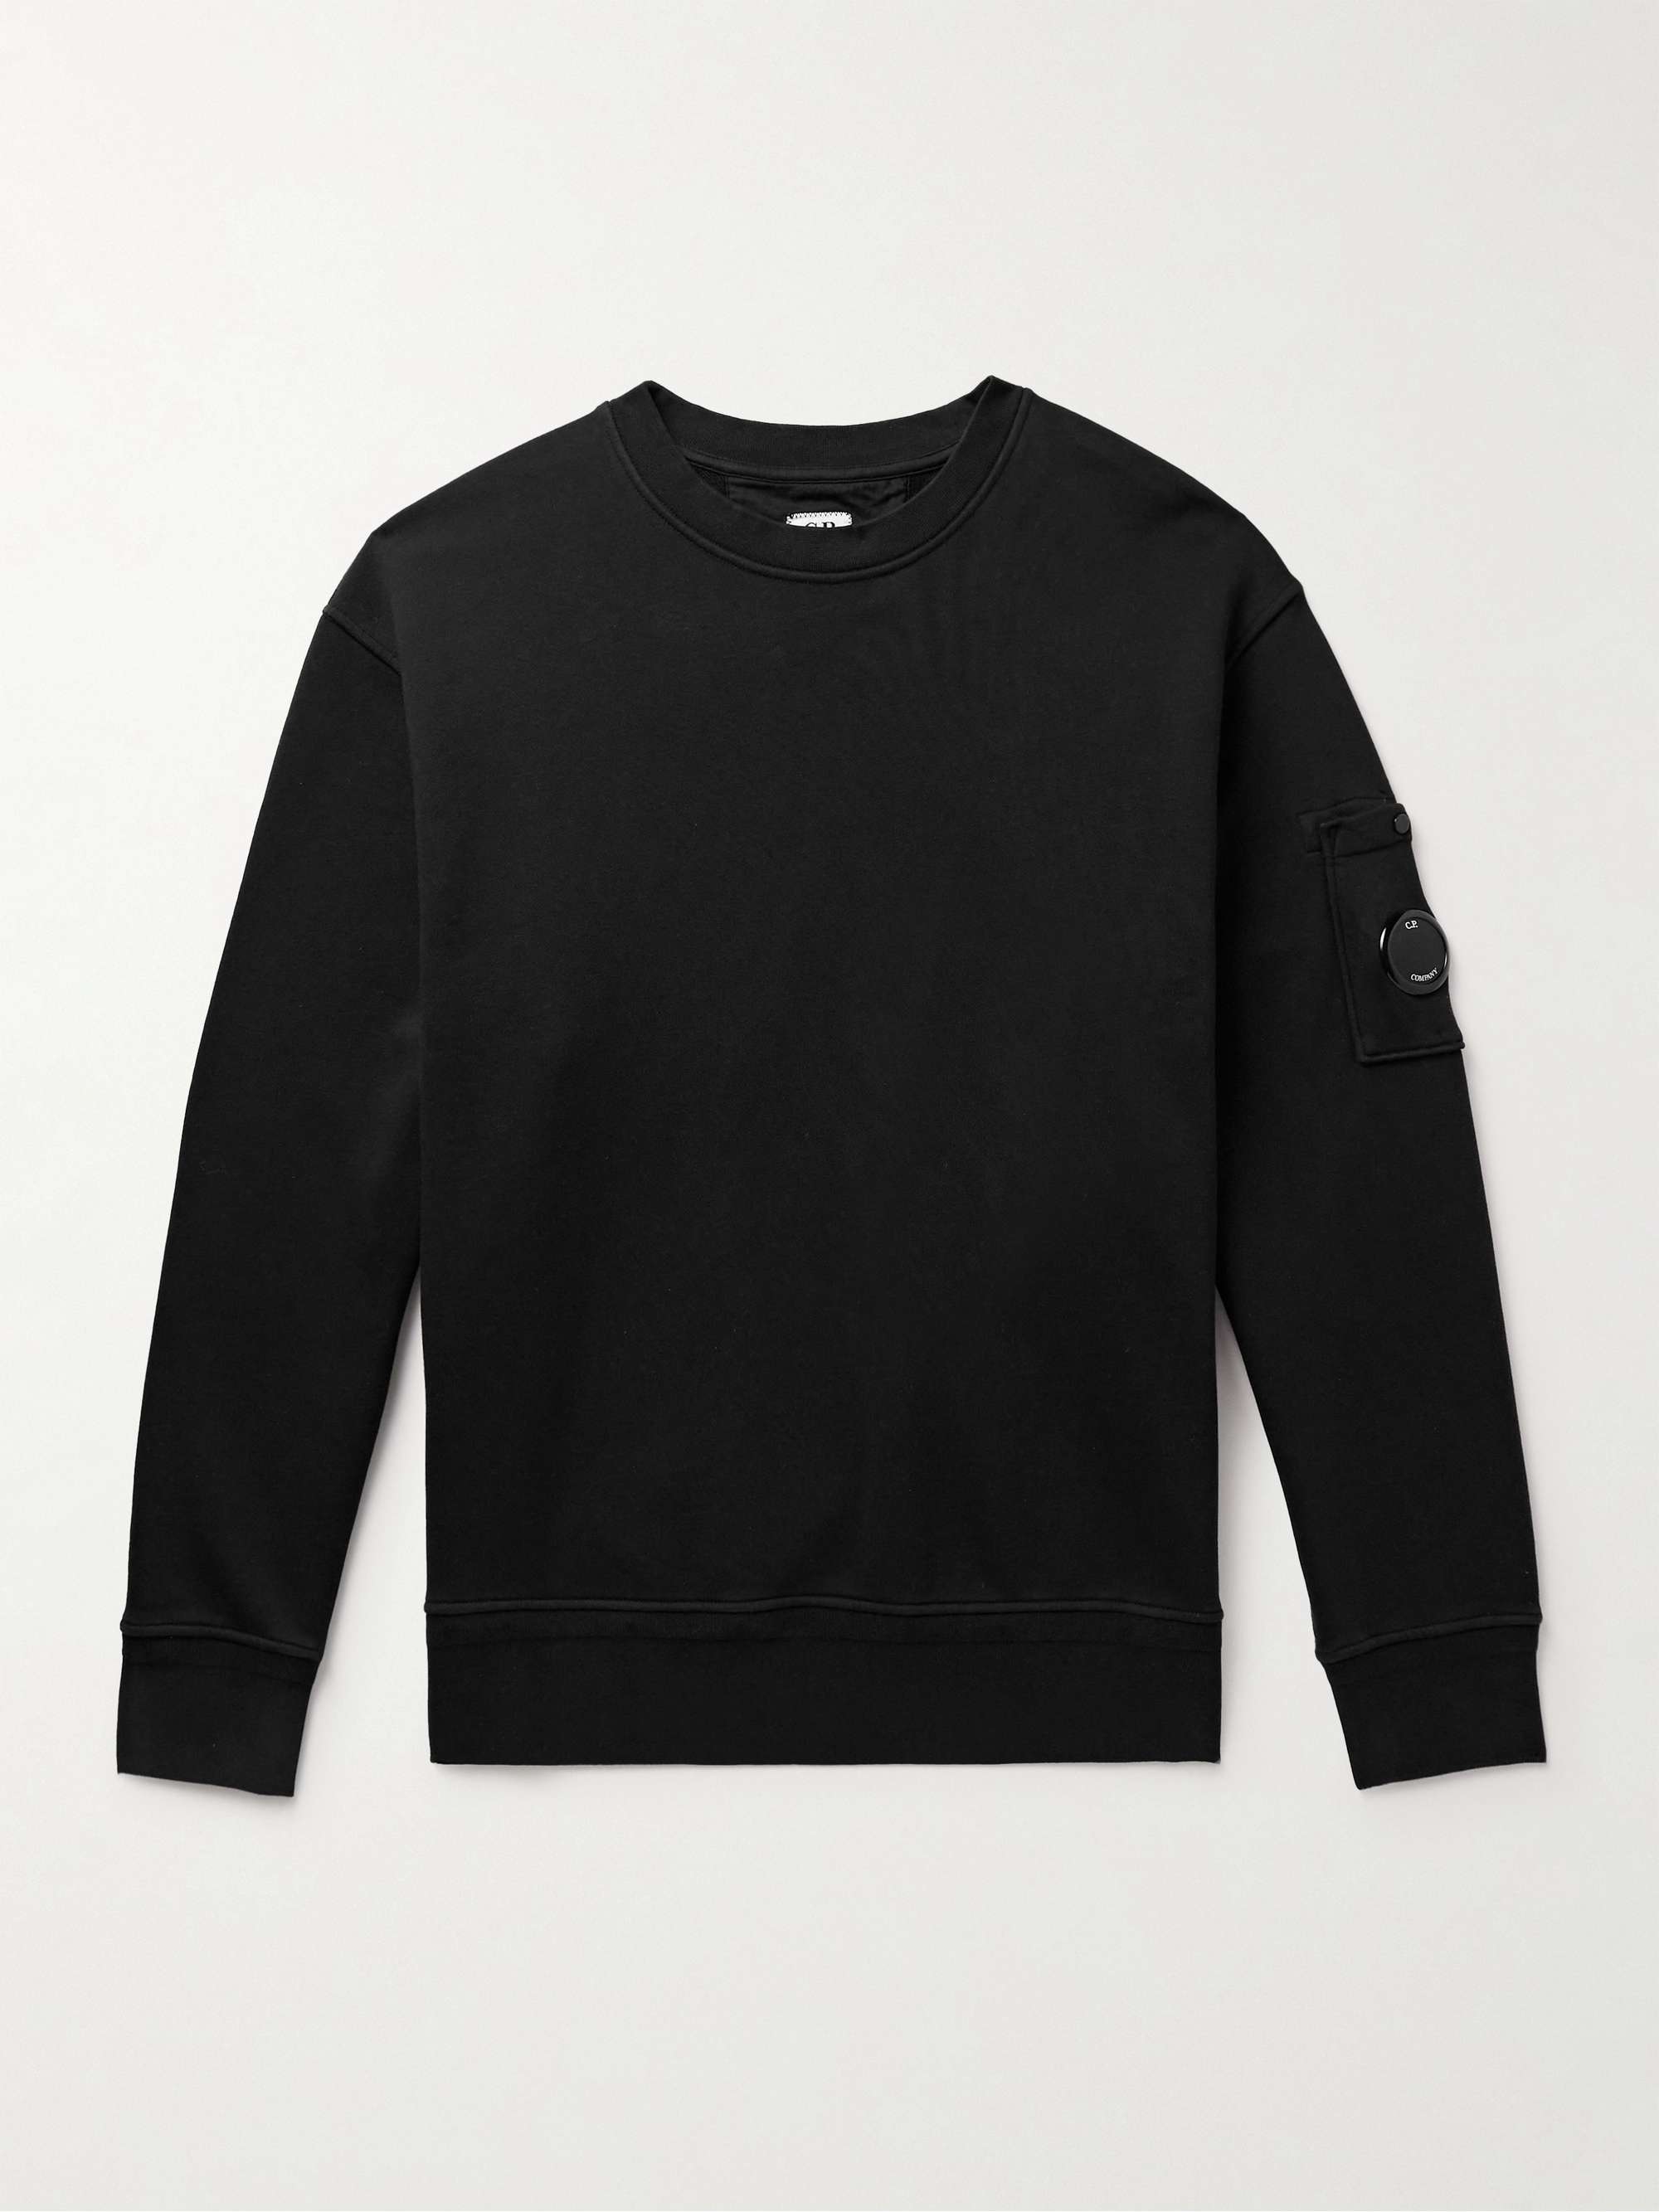 C.P. COMPANY Logo-Appliquéd Cotton-Jersey Sweatshirt for Men | MR PORTER